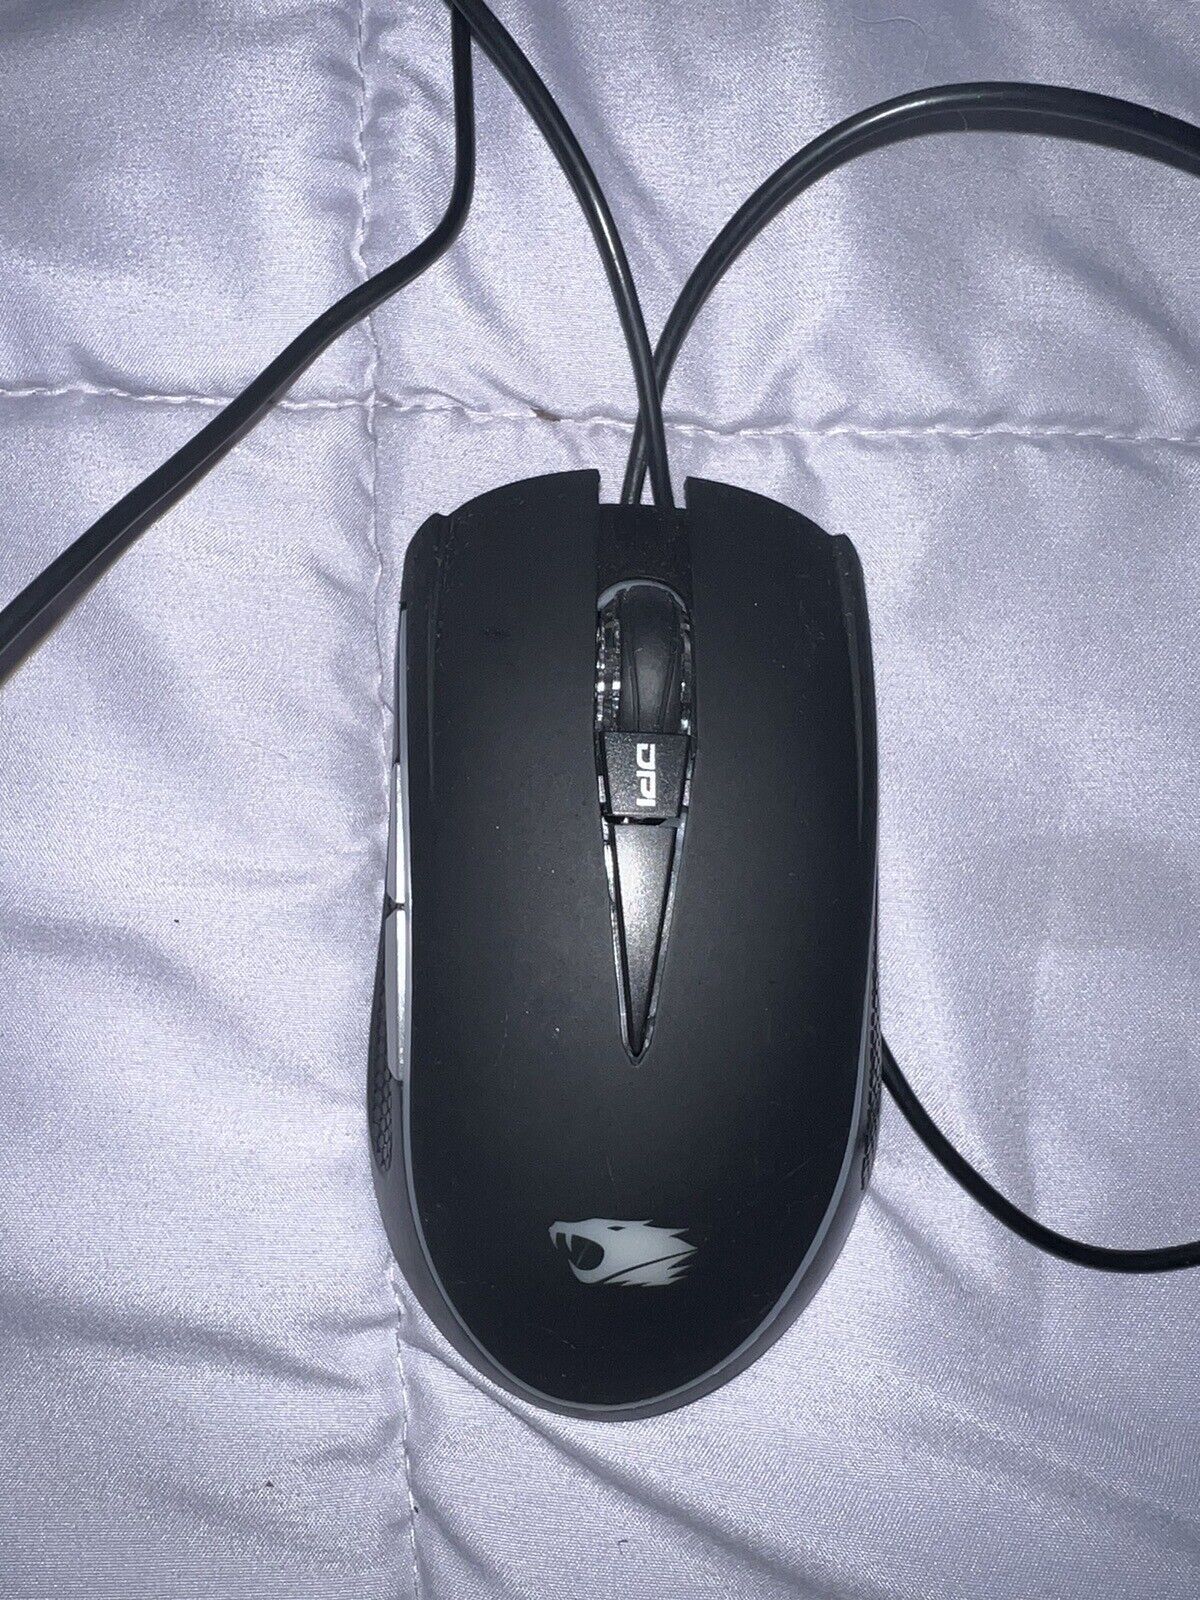 Zeus E2 3200 Optical Gaming Mouse - USB Wired - iBUYPOWER - IBP-ZEUS E2